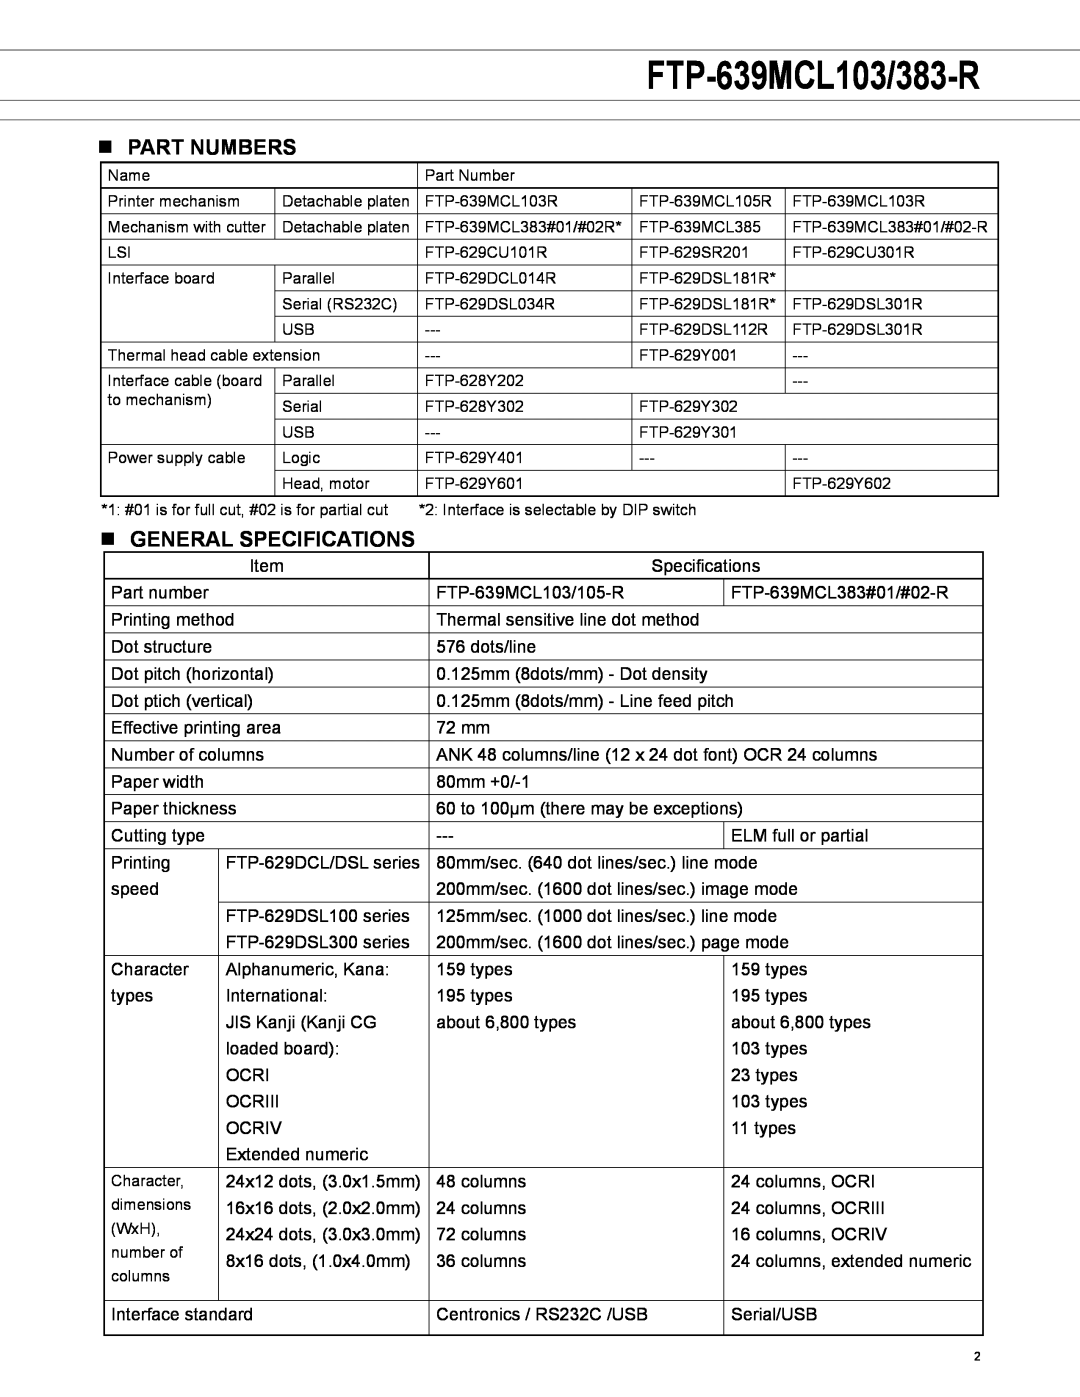 Fujitsu FTP-639MCL103/383-R manual n part Numbers, n GENERAL SPECIFICATIONS 